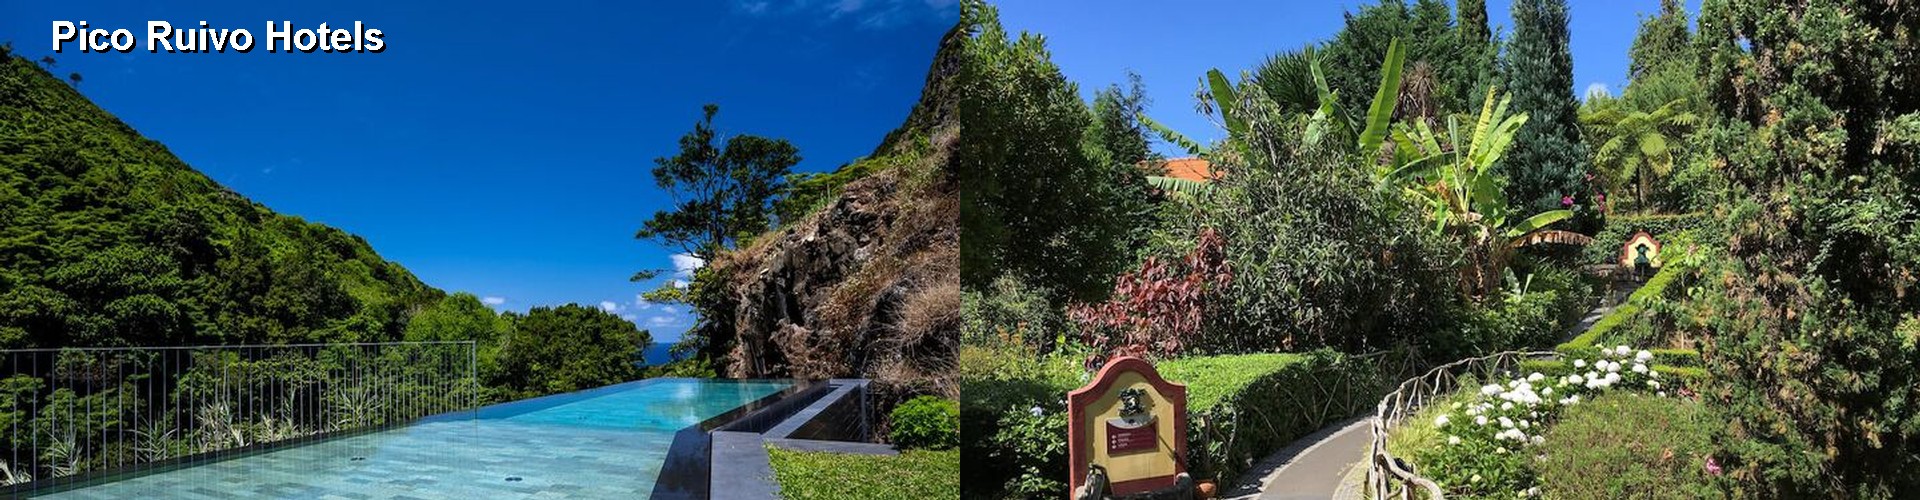 5 Best Hotels near Pico Ruivo